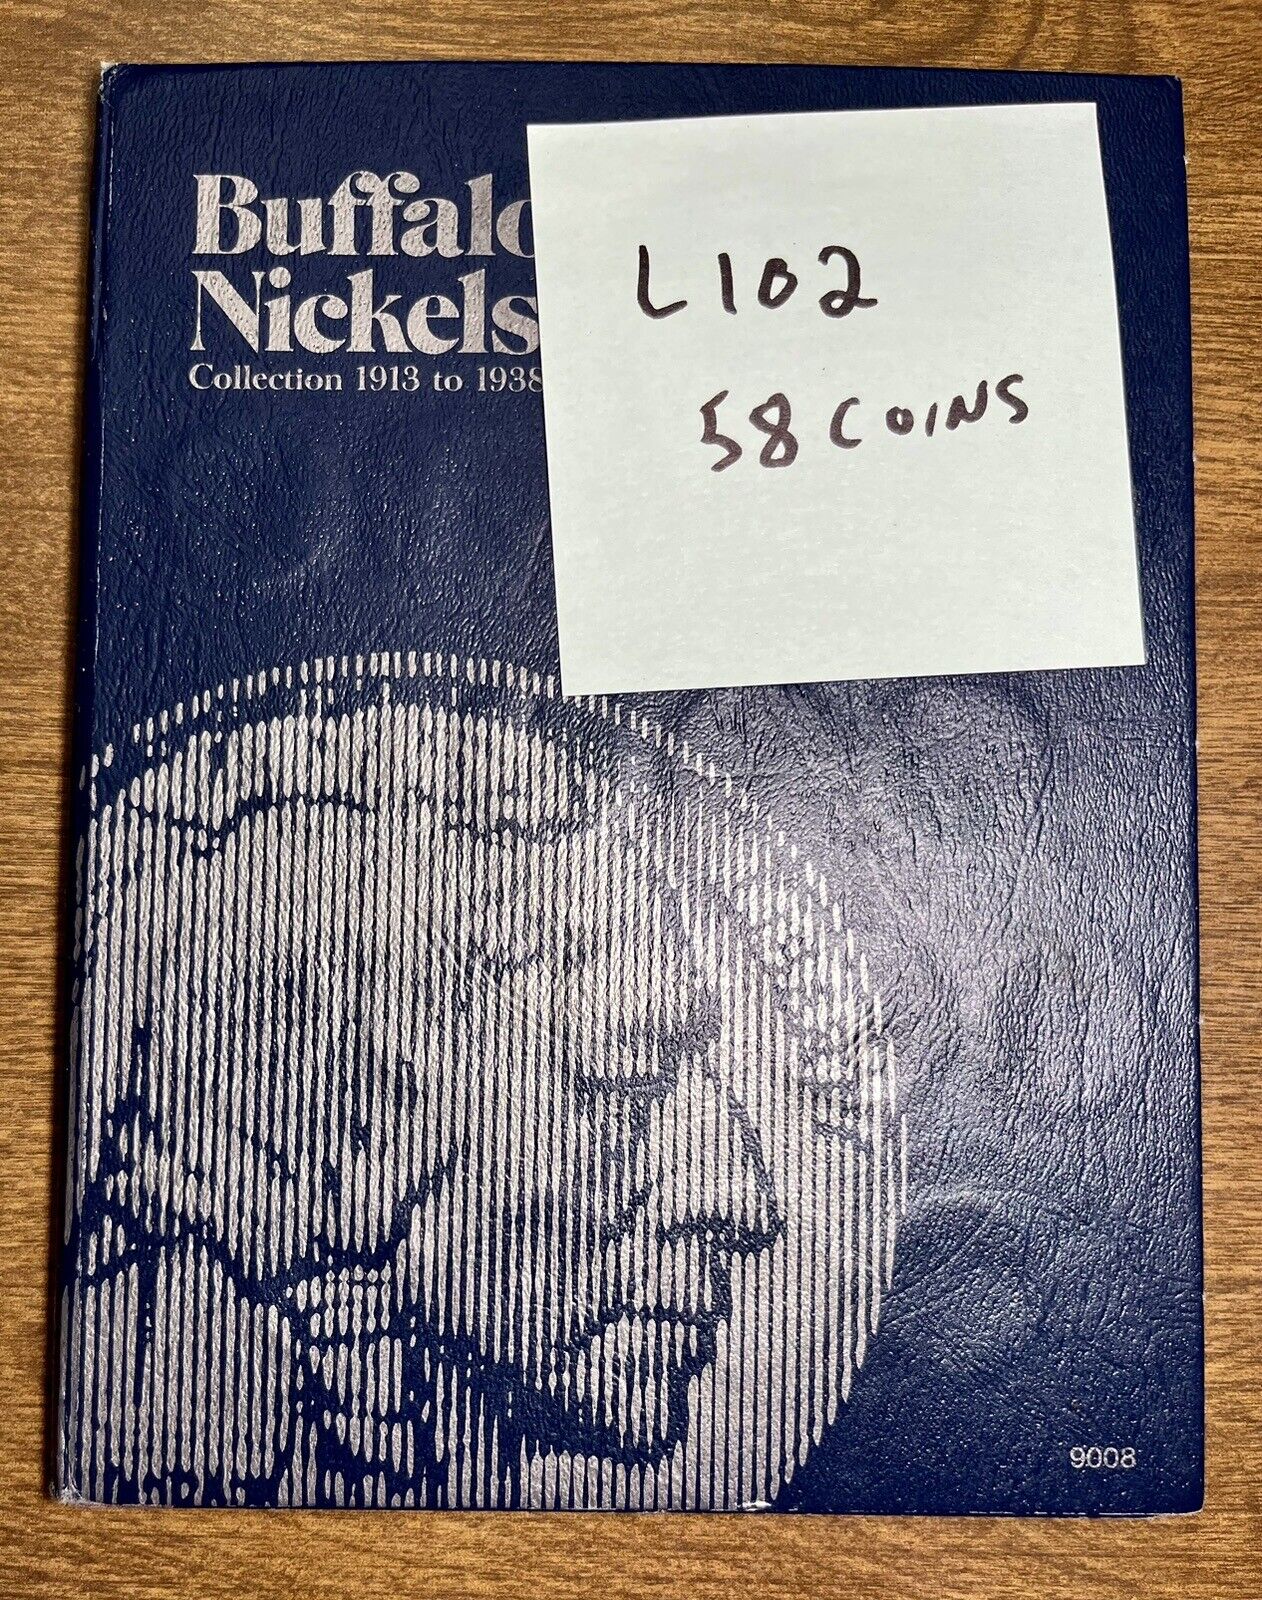 Buffalo Nickel collection and  Whitman folder - partial collection